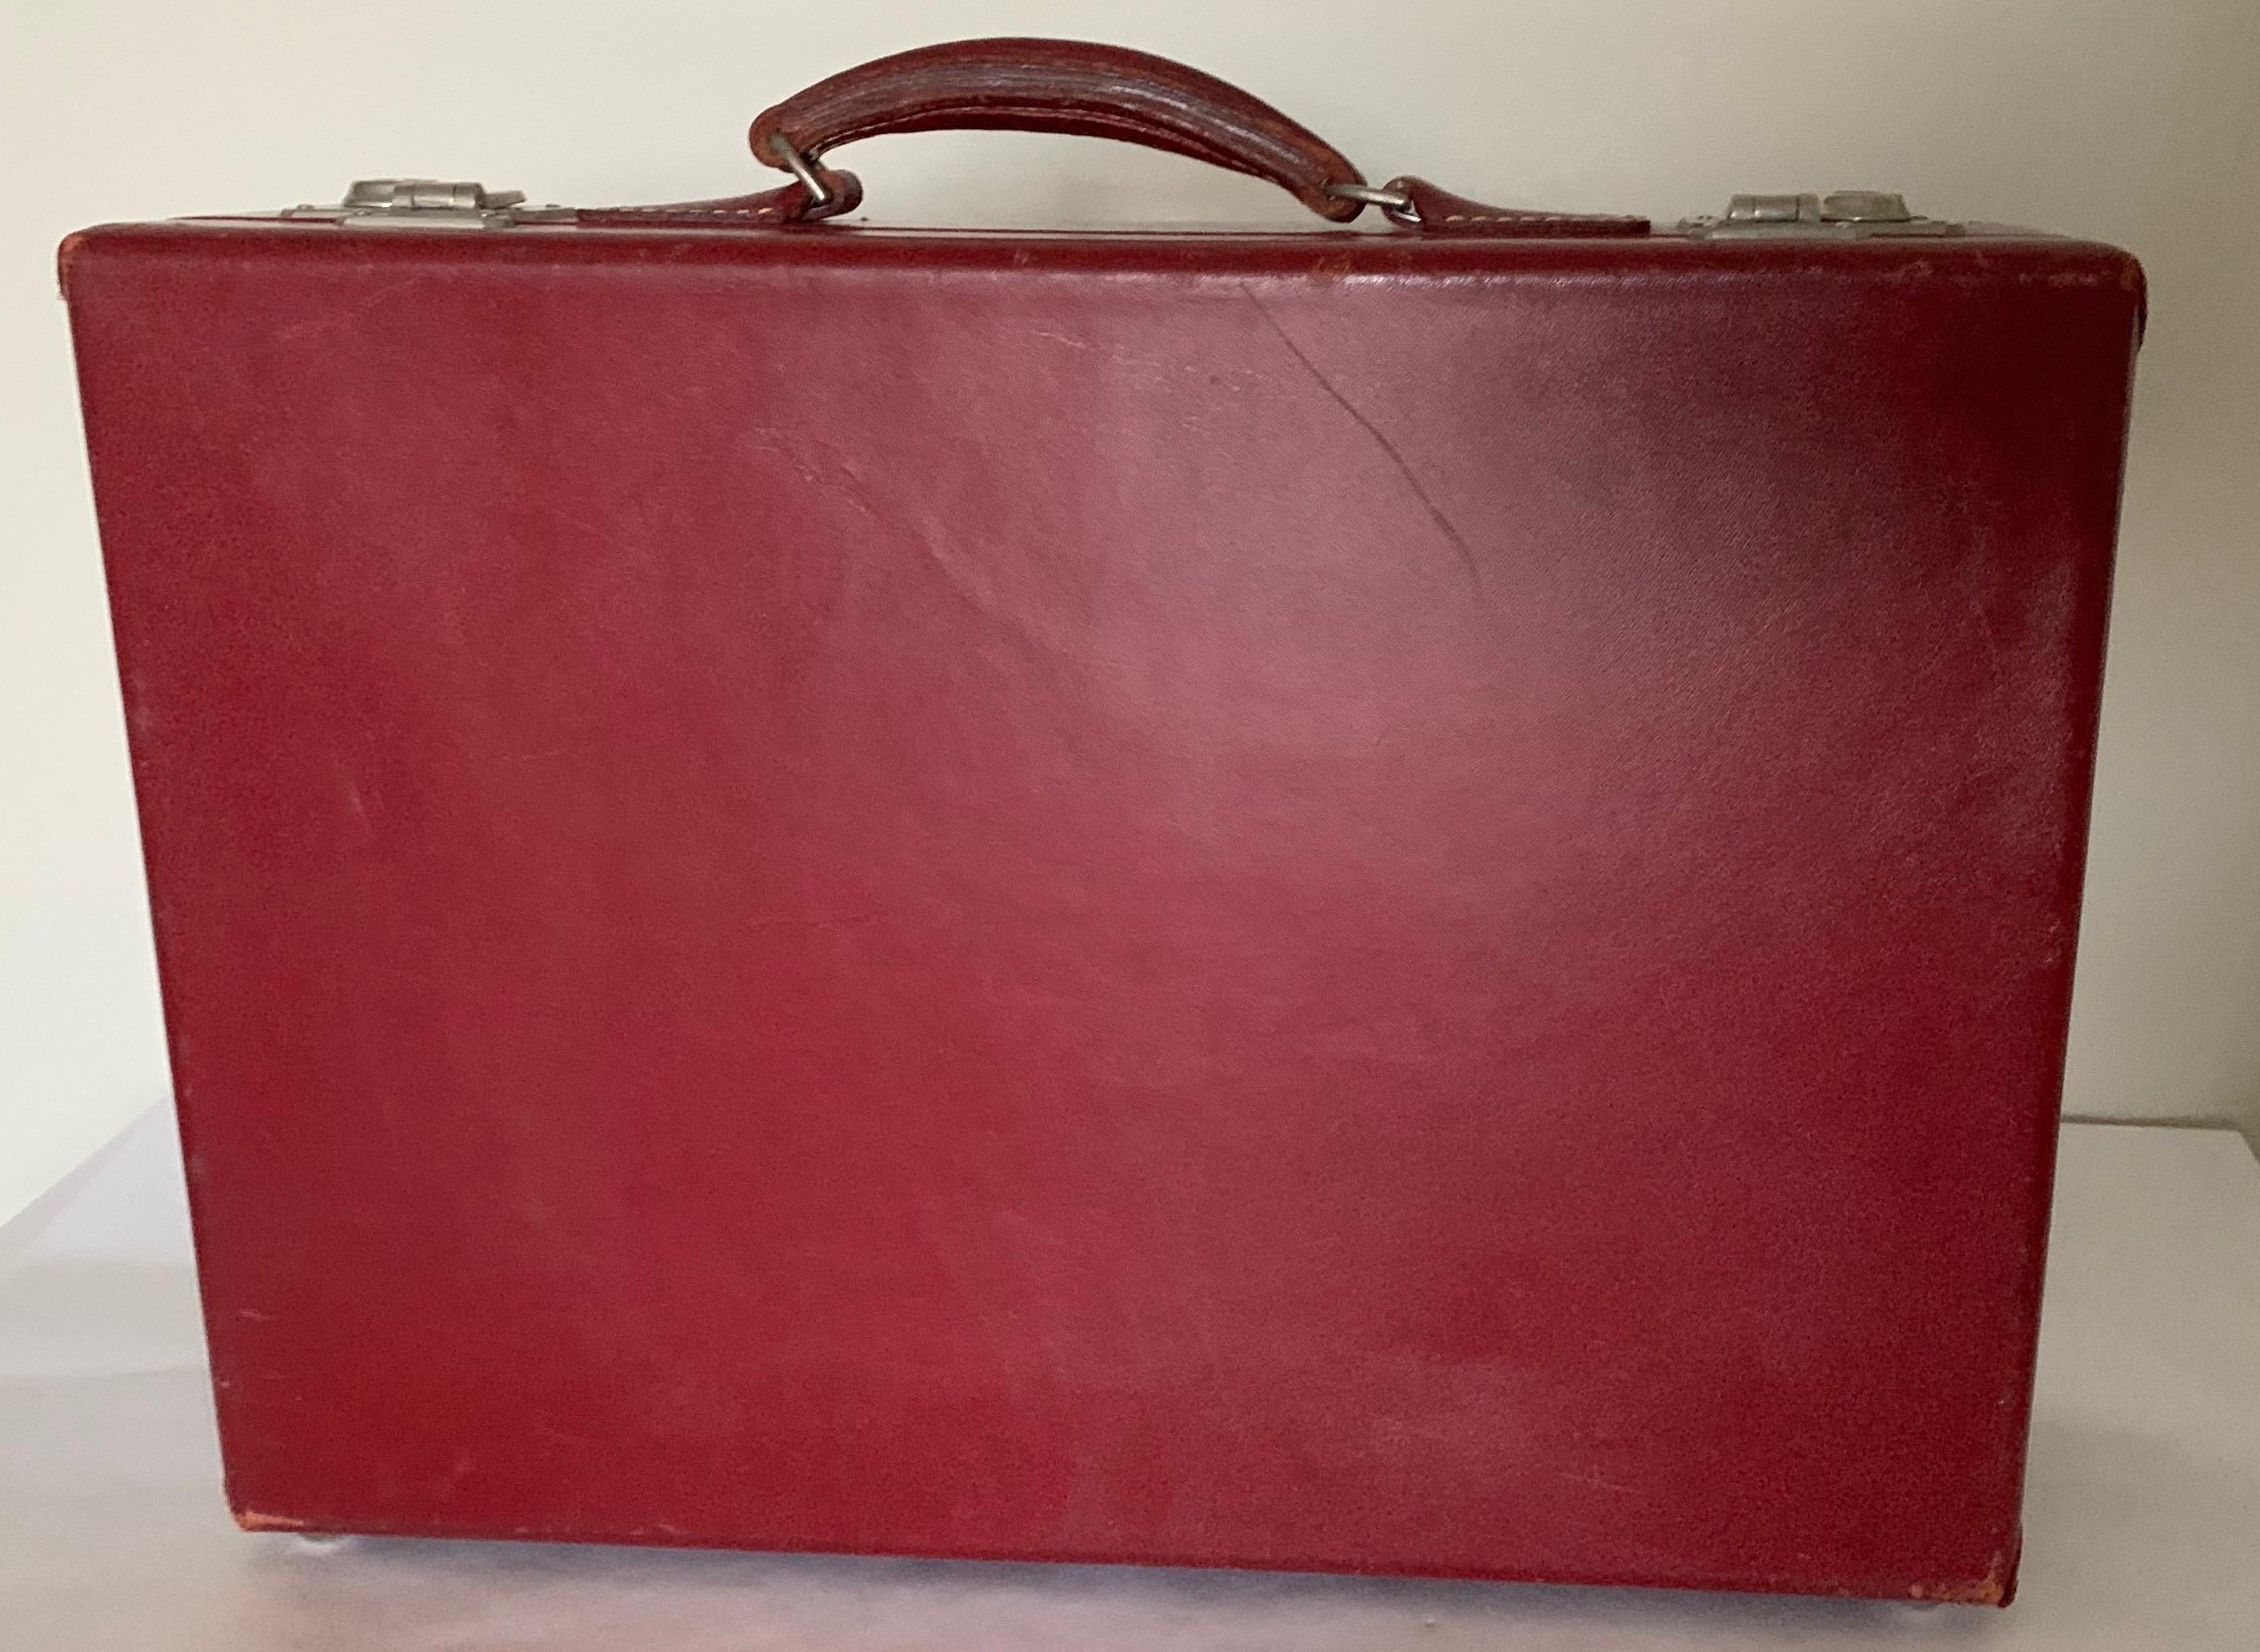 1950s briefcase